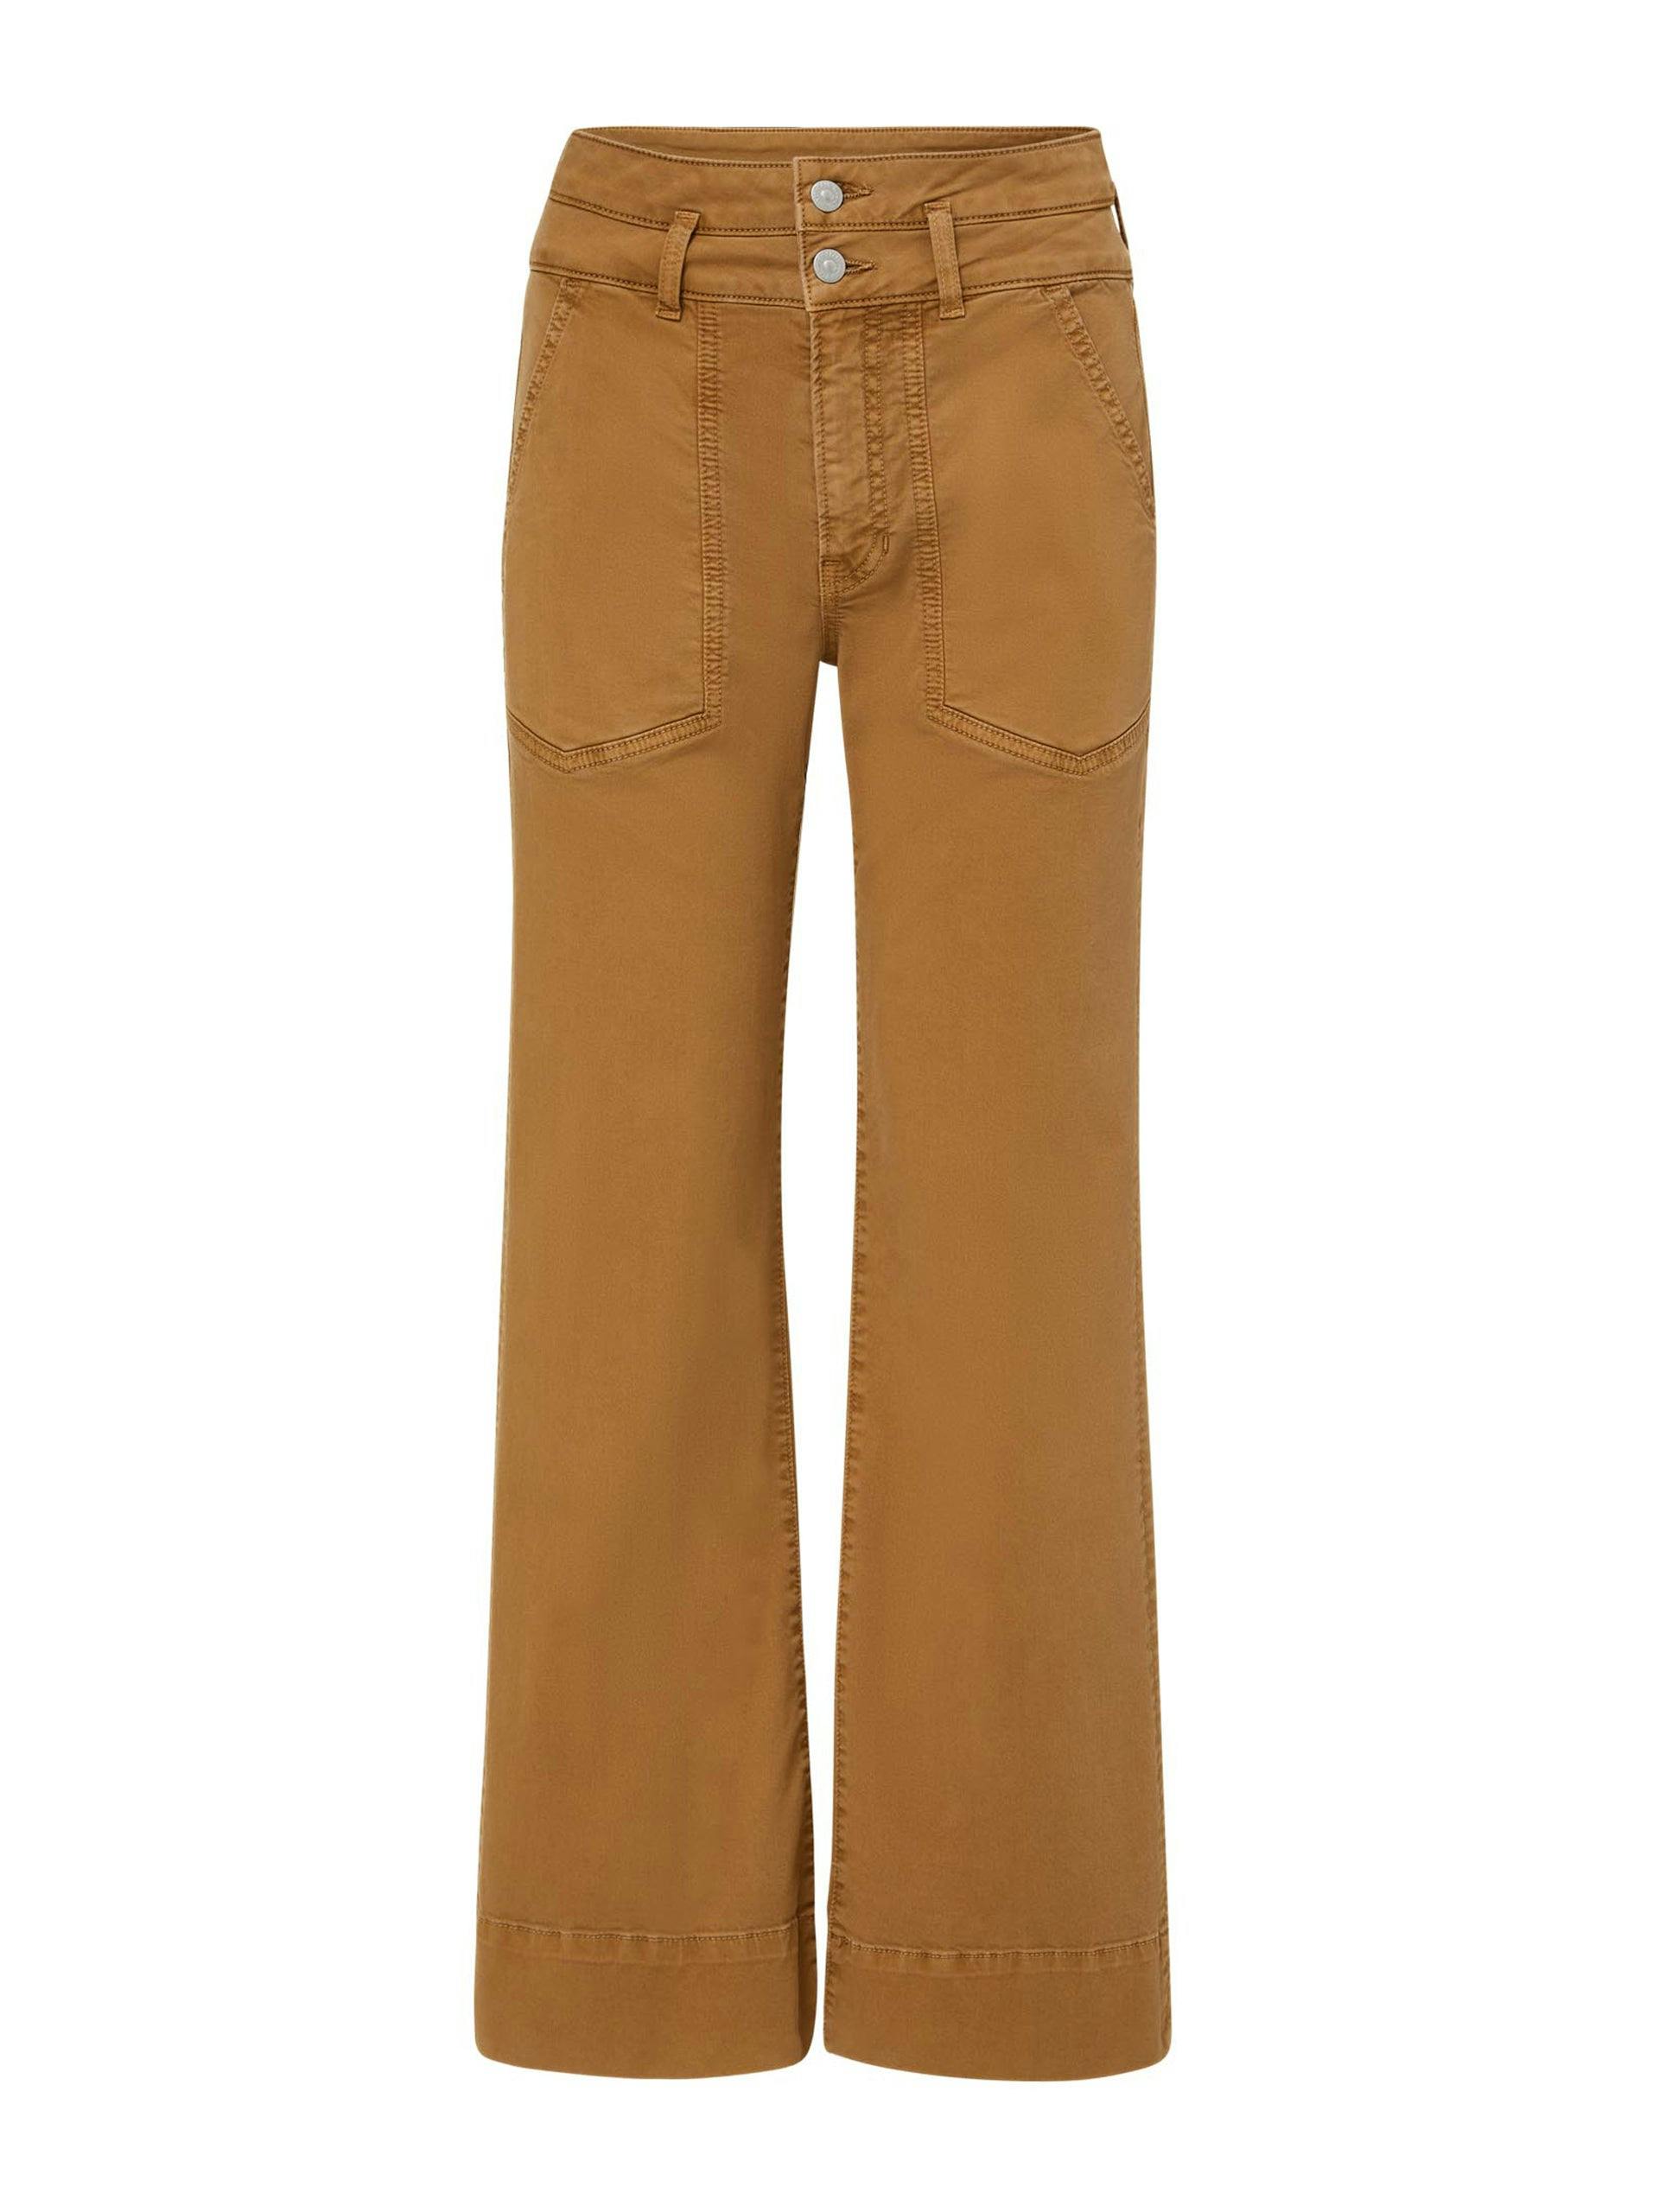 Dark beige high-waisted trousers